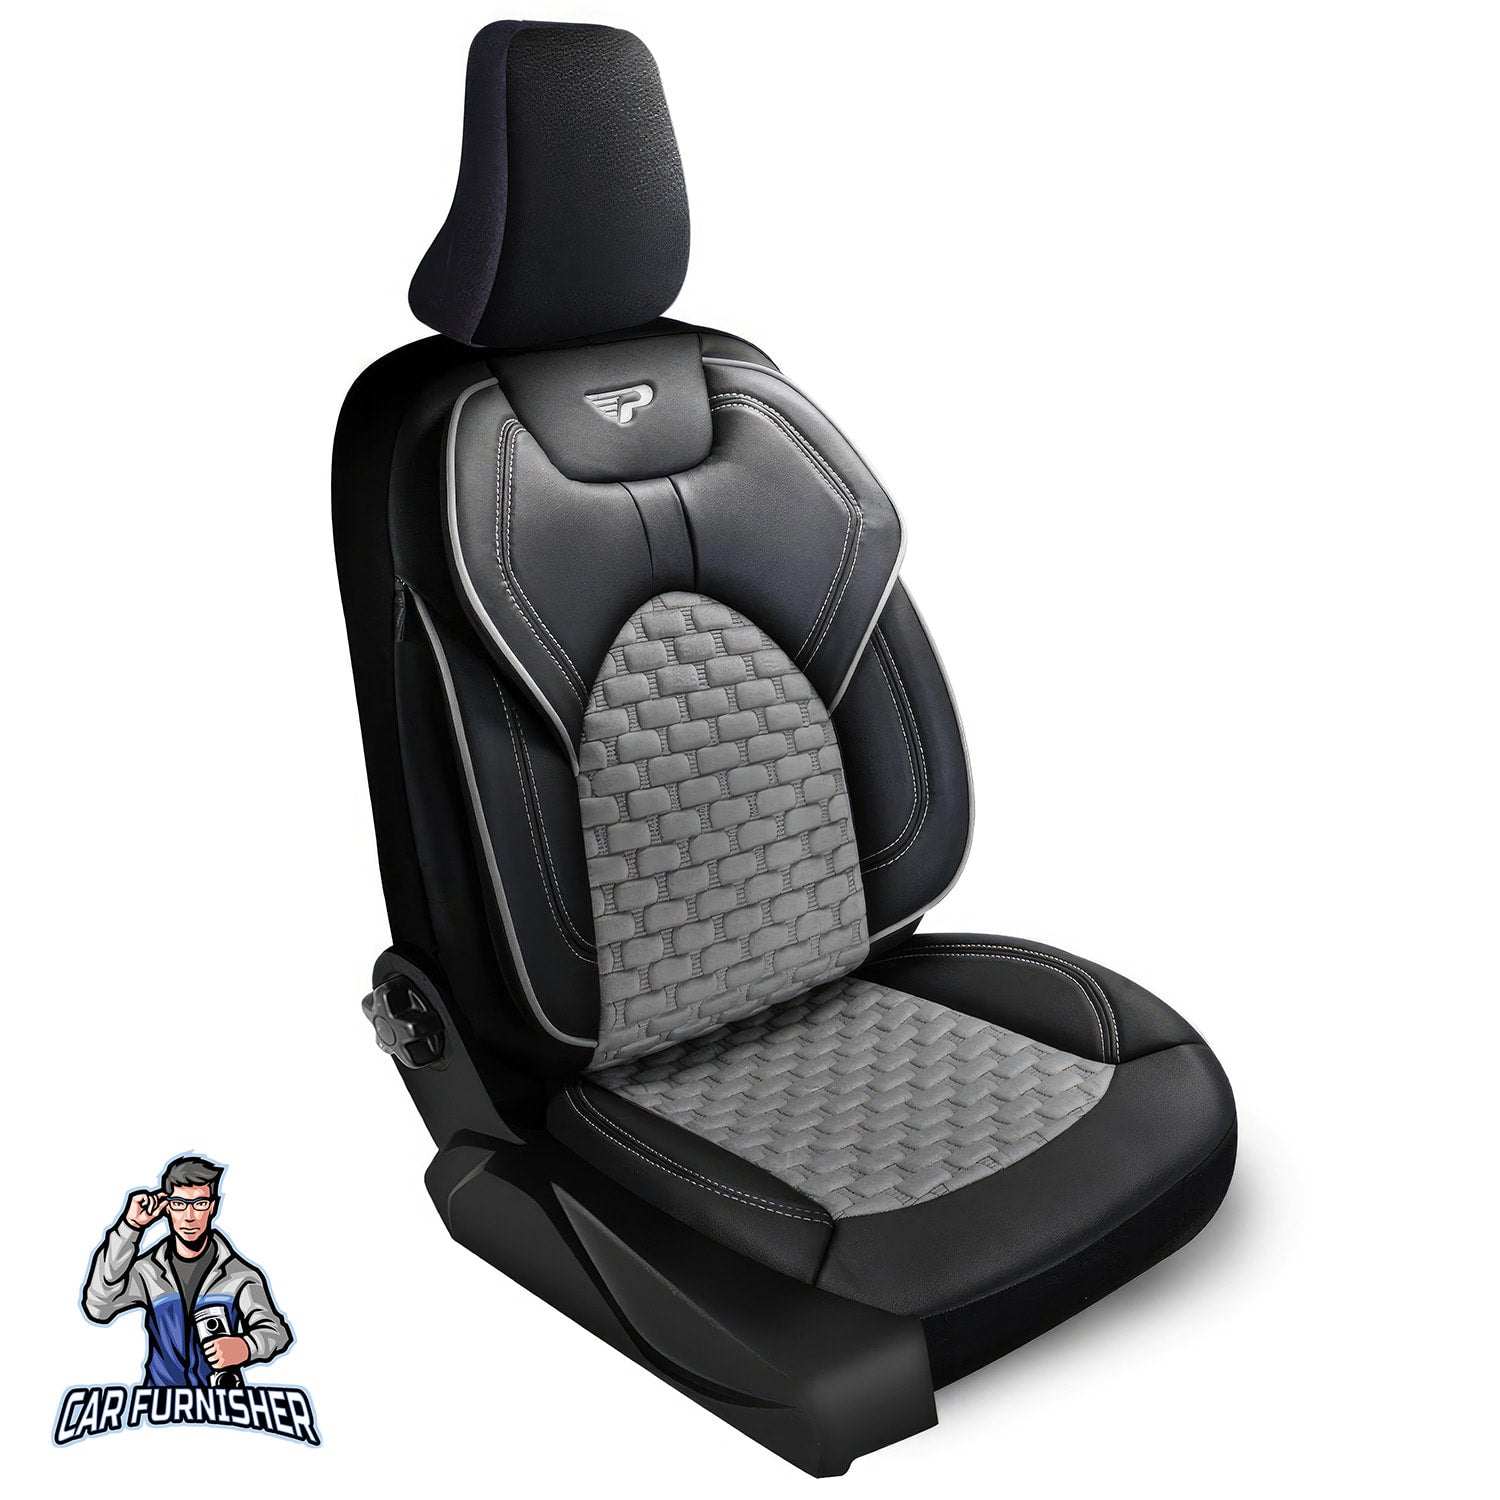 Car Seat Cover Set - Naples Design Gray 5 Seats + Headrests (Full Set) Leather & Velvet Fabric